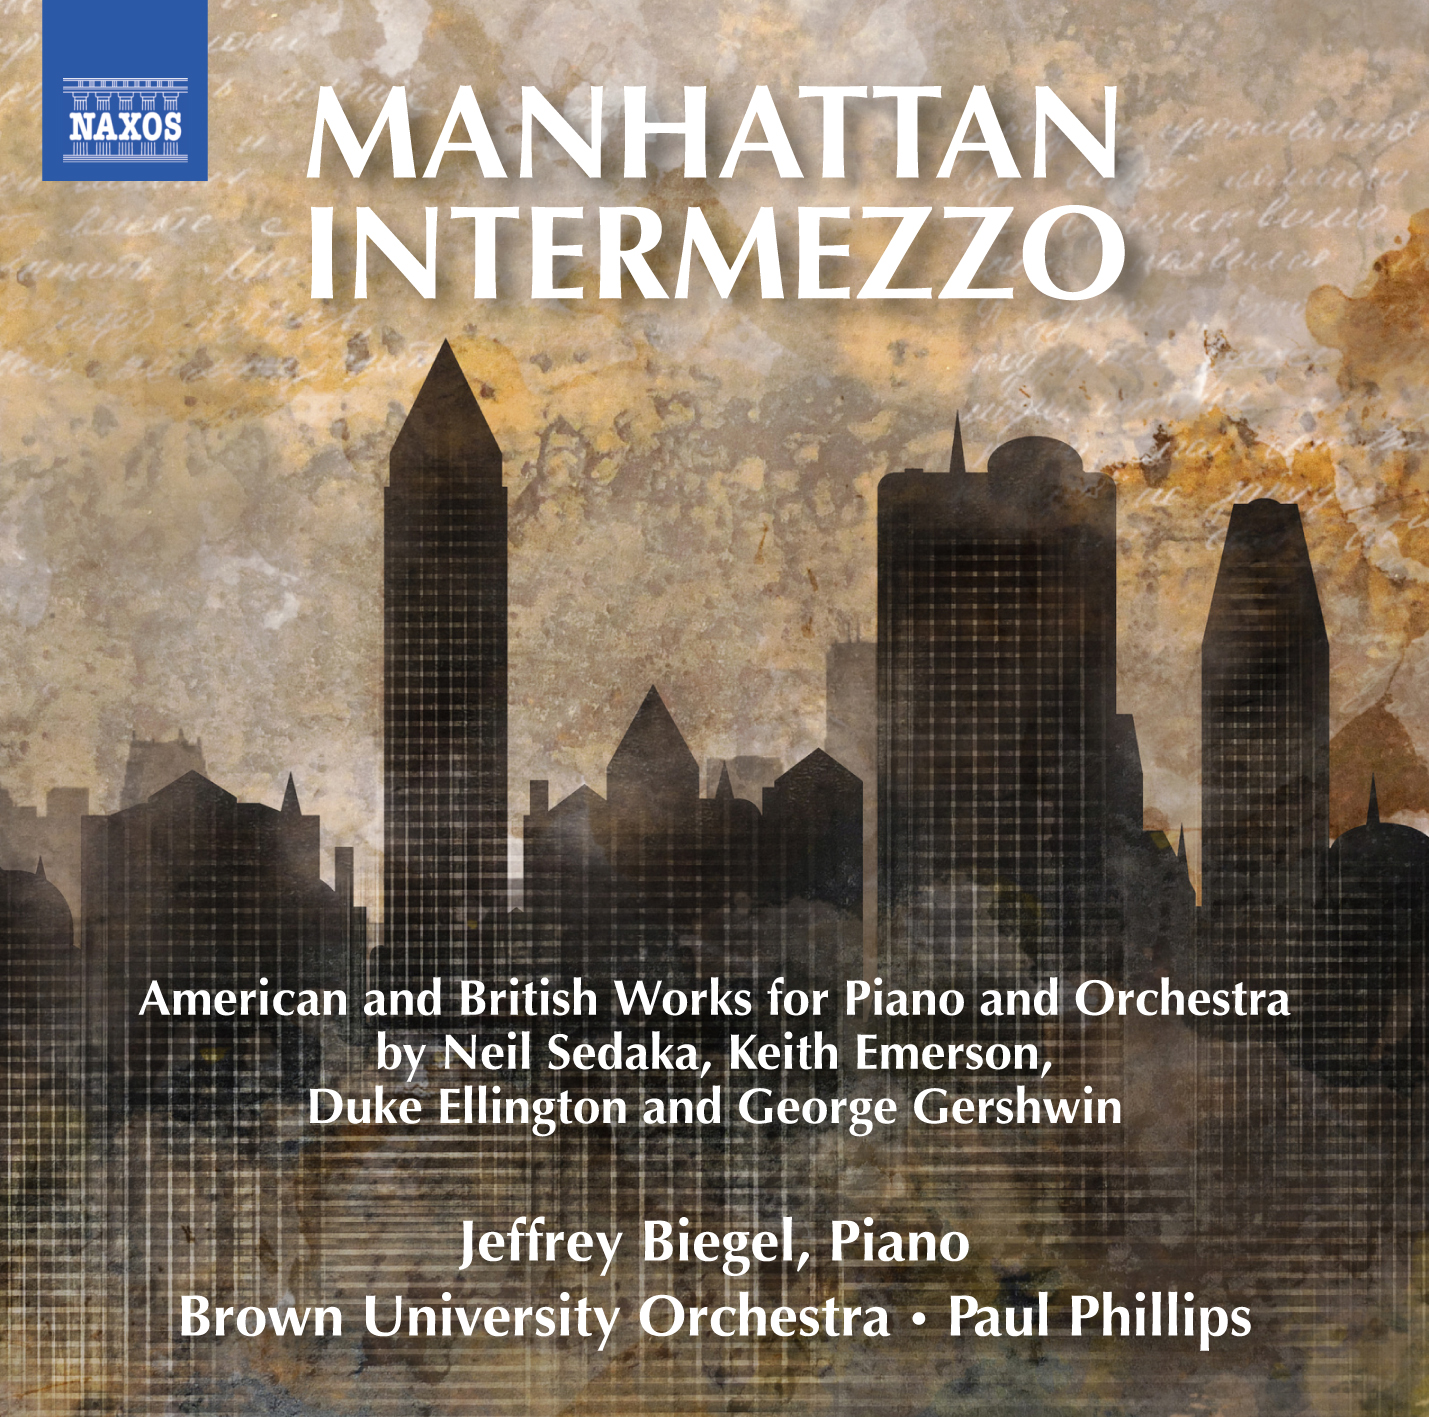 Manhattan Intermezzo - Works by Neil Sedaka, Keith Emerson, Duke Ellington, and George Gershwin - Brown University Orchestra - Jeffrey Biegel, Piano - CD cover